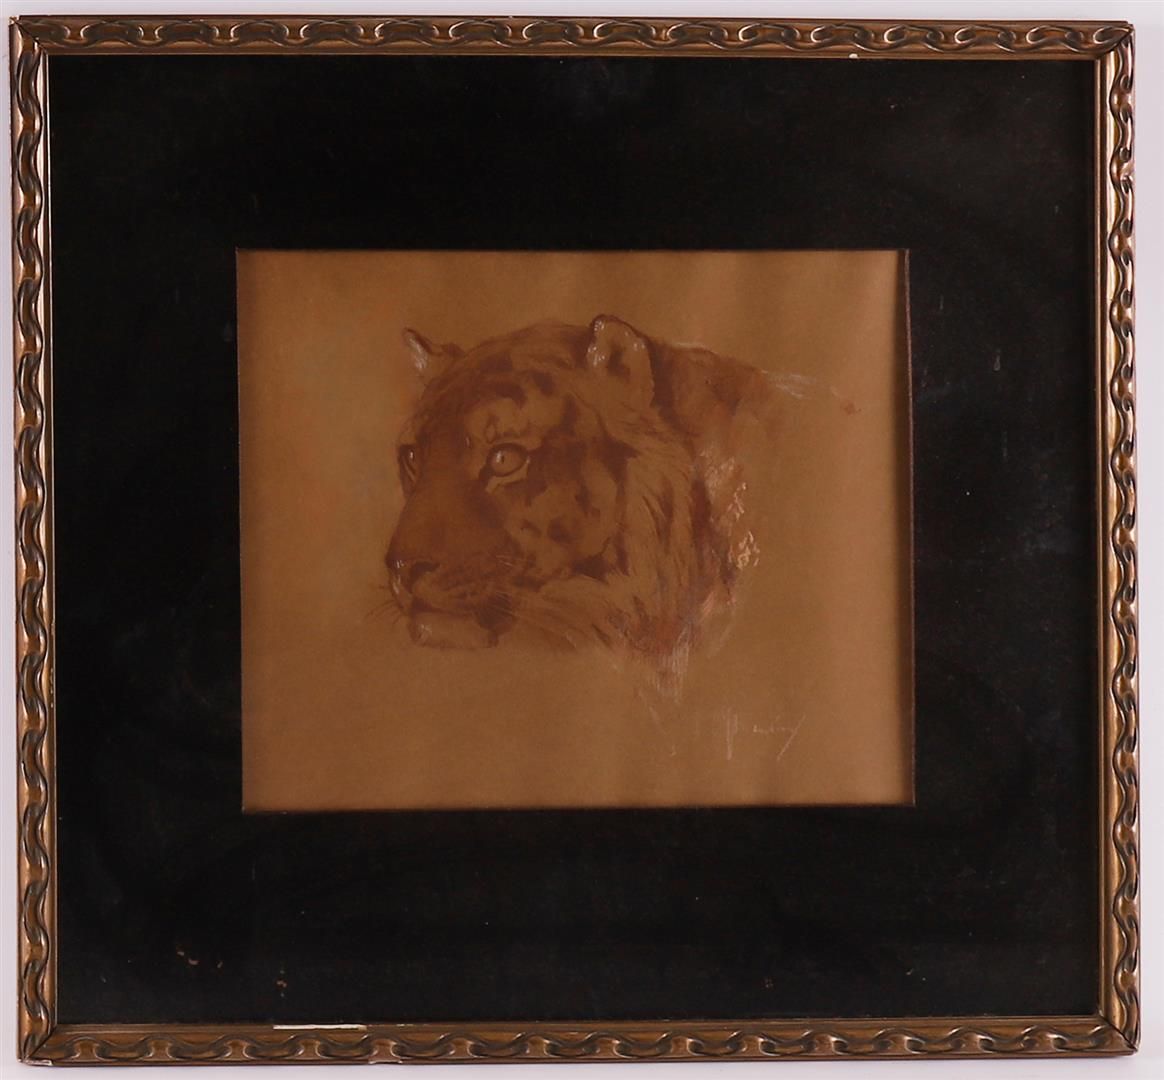 Null Mension, Cornelis Jan (Delft 1882-1950) "Tête de tigre",